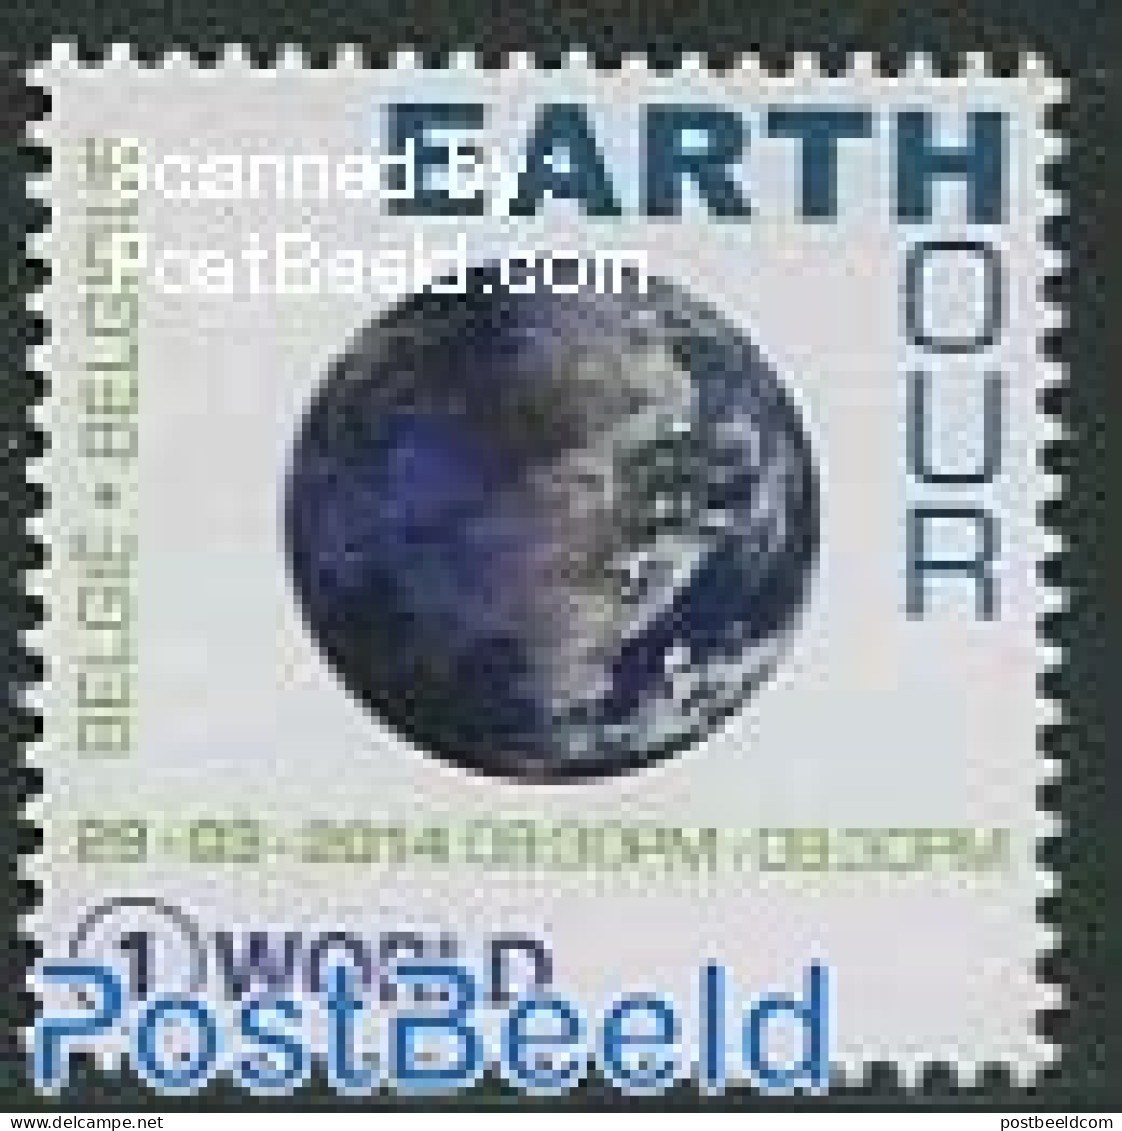 Belgium 2014 Earth Hour 1v, Mint NH, Nature - Various - Environment - Globes - Ongebruikt